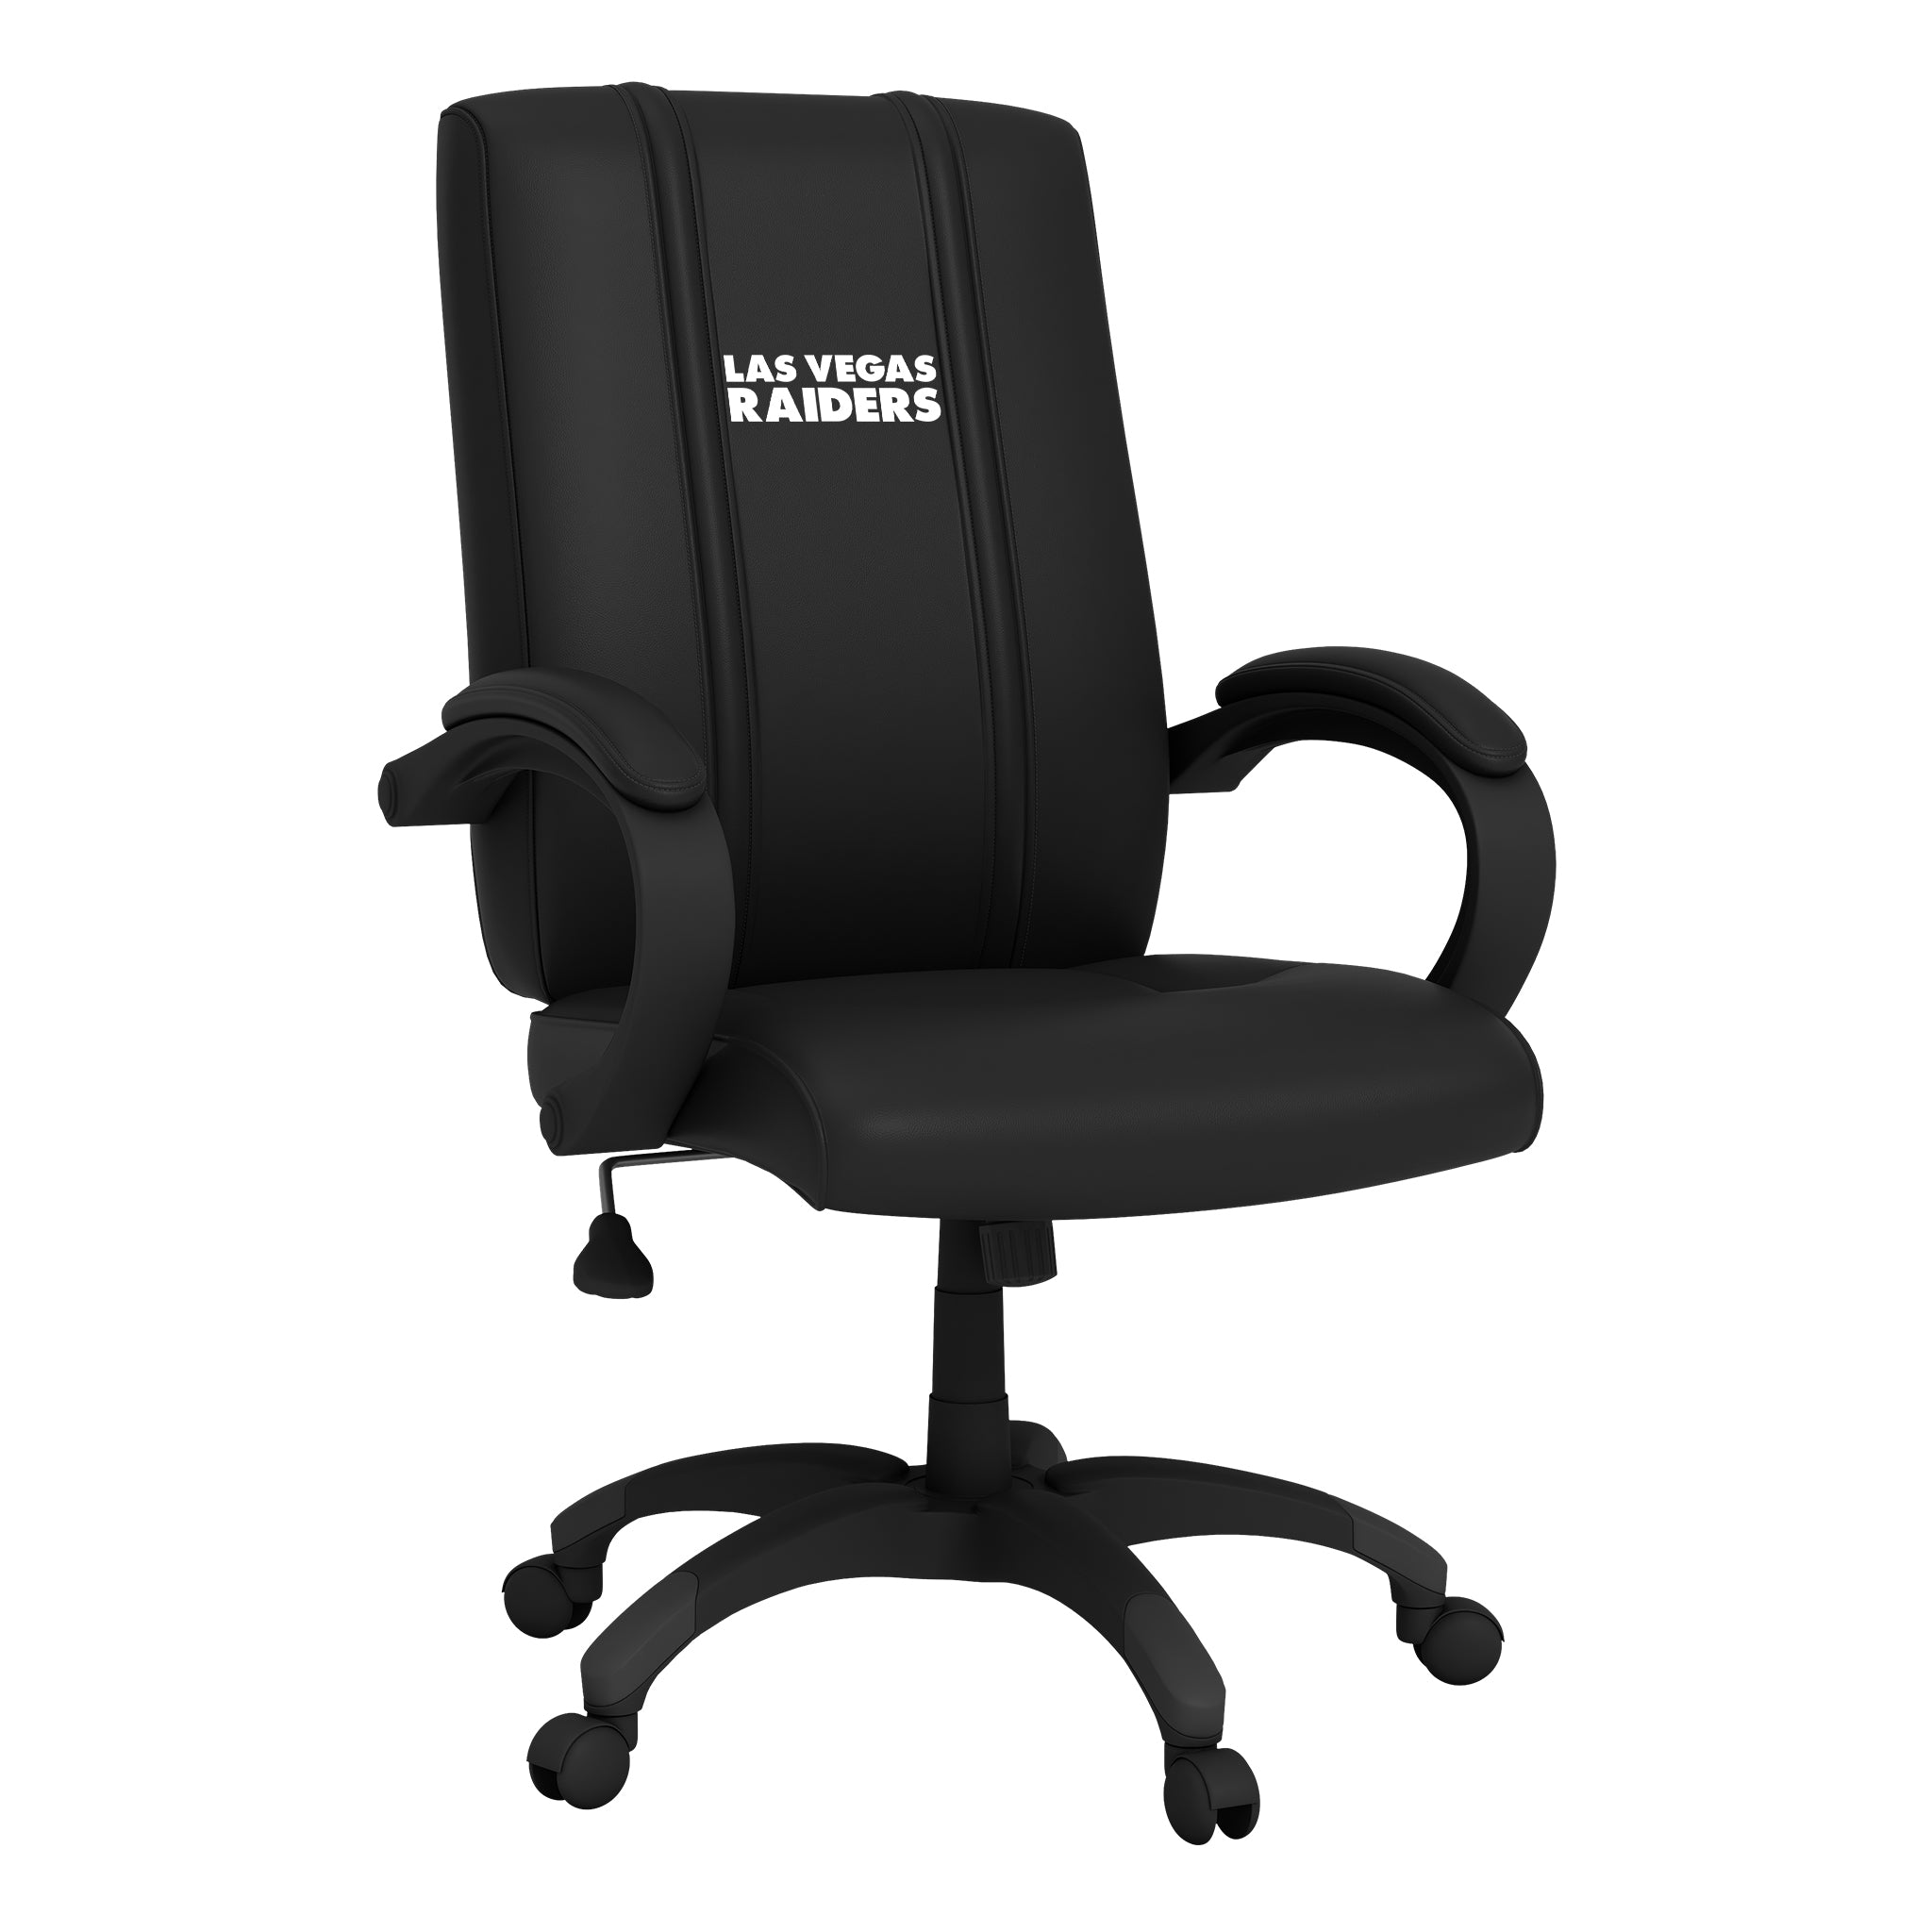 Las Vegas Raiders Office Chair 1000